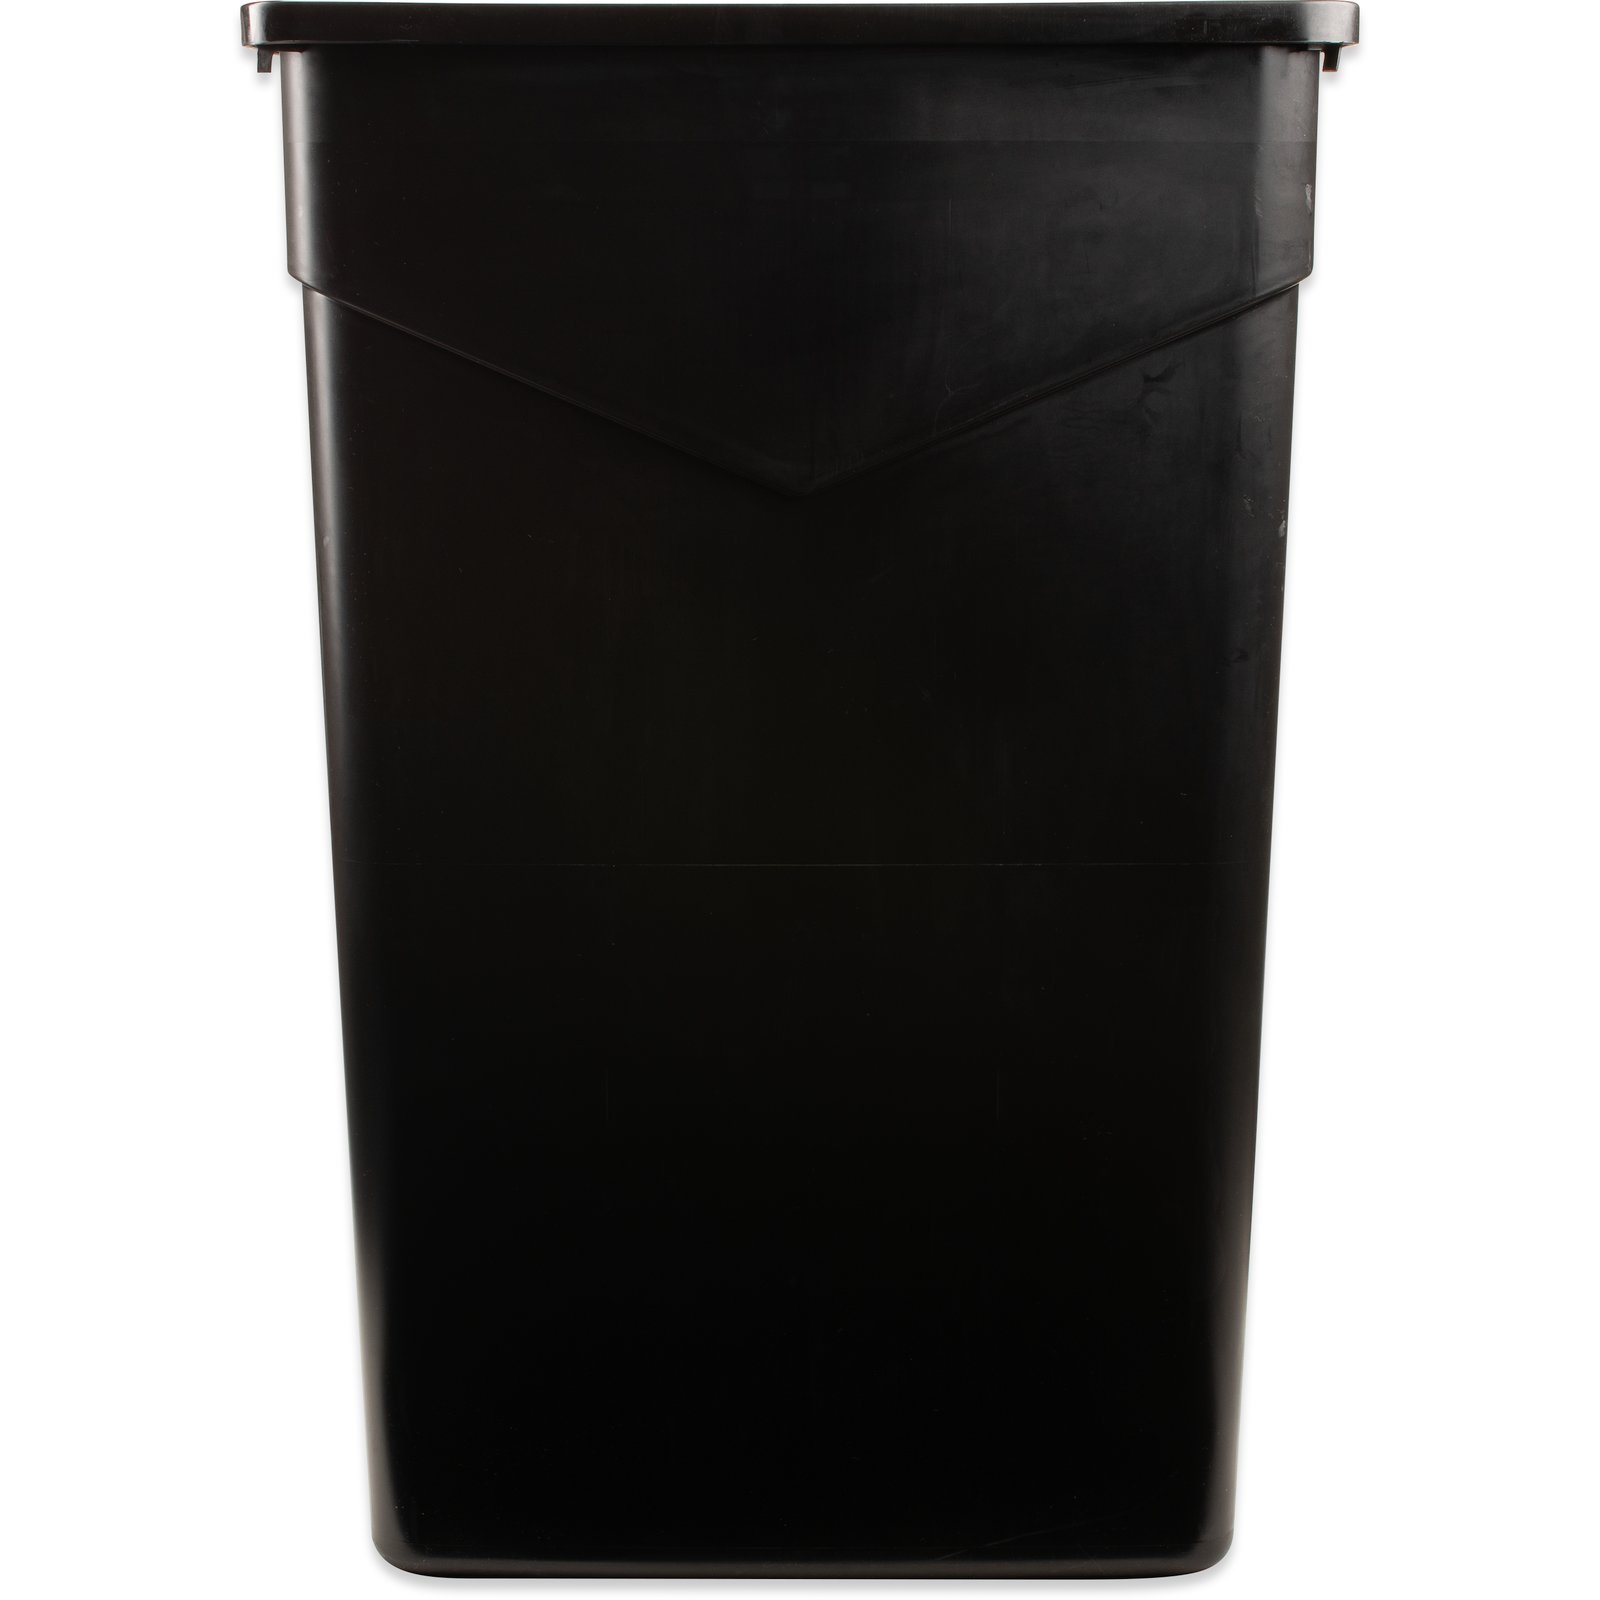 TrimLine Rectangle Waste  Container, 23 Gallon, Black - 